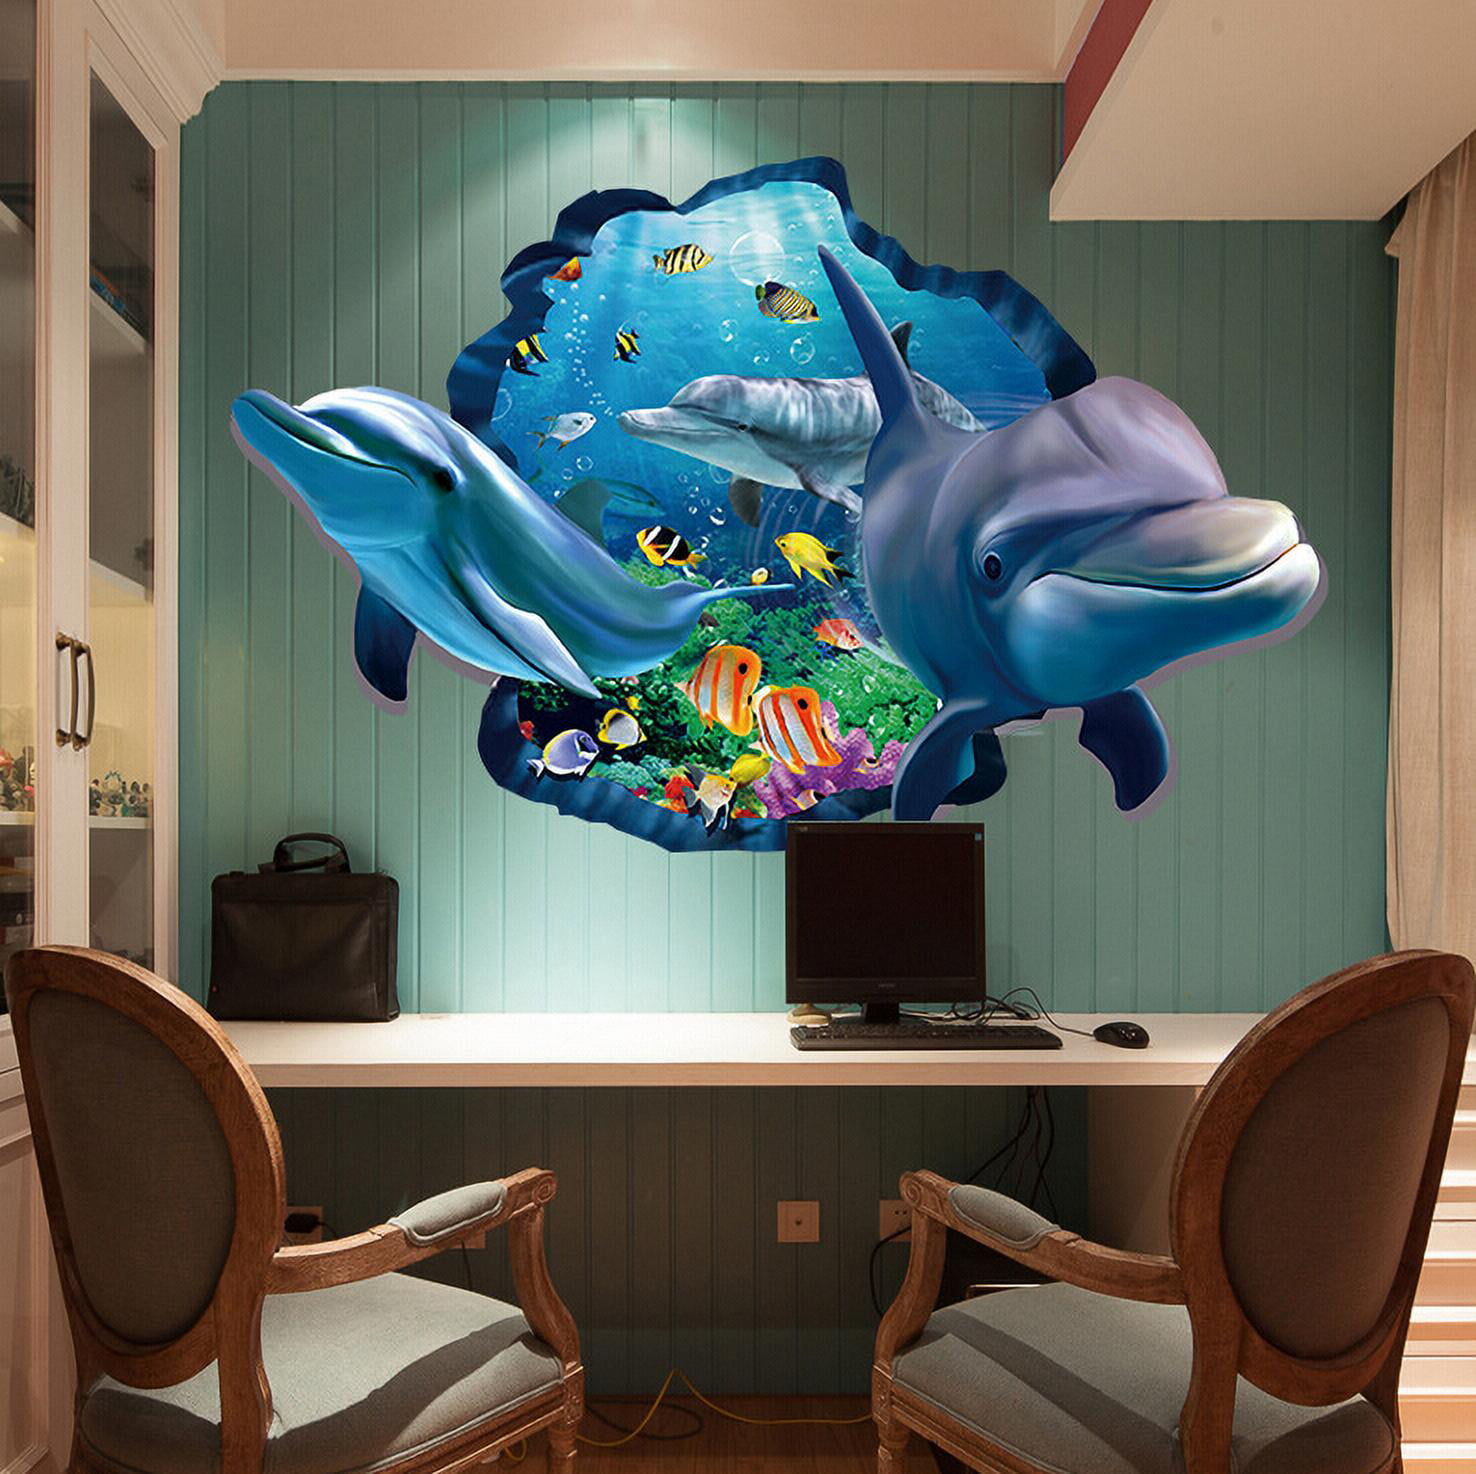 3D Ocean Dolphin Removable Vinyl Decal Wall Sticker Art Mural Room Window Decor 